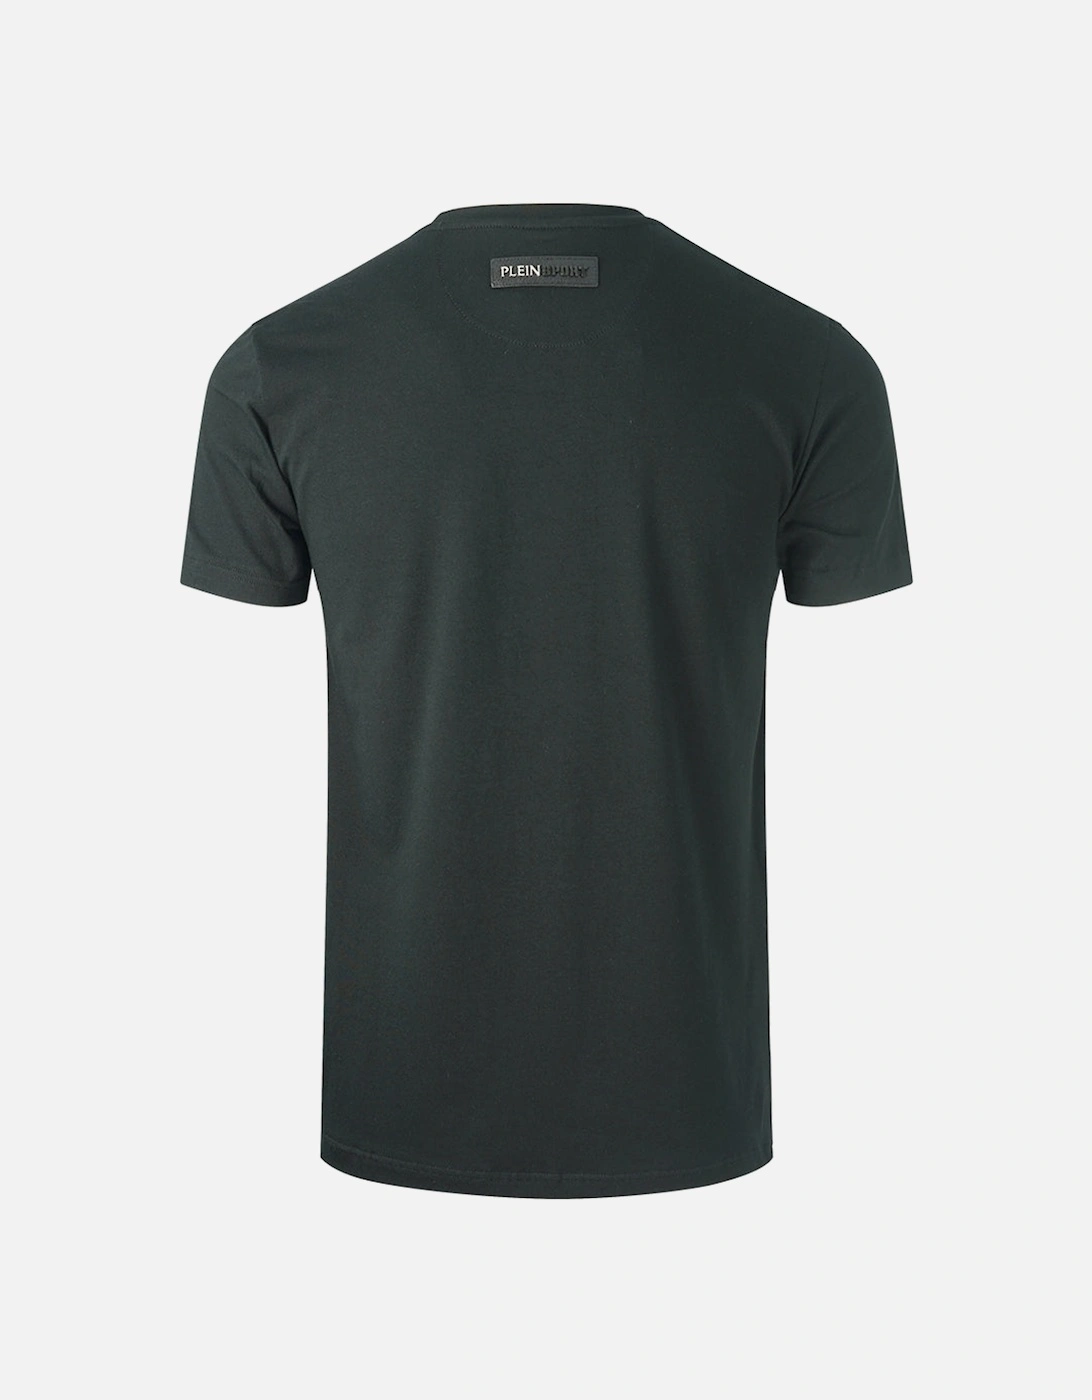 Plein Sport Signature Logo Black T-Shirt